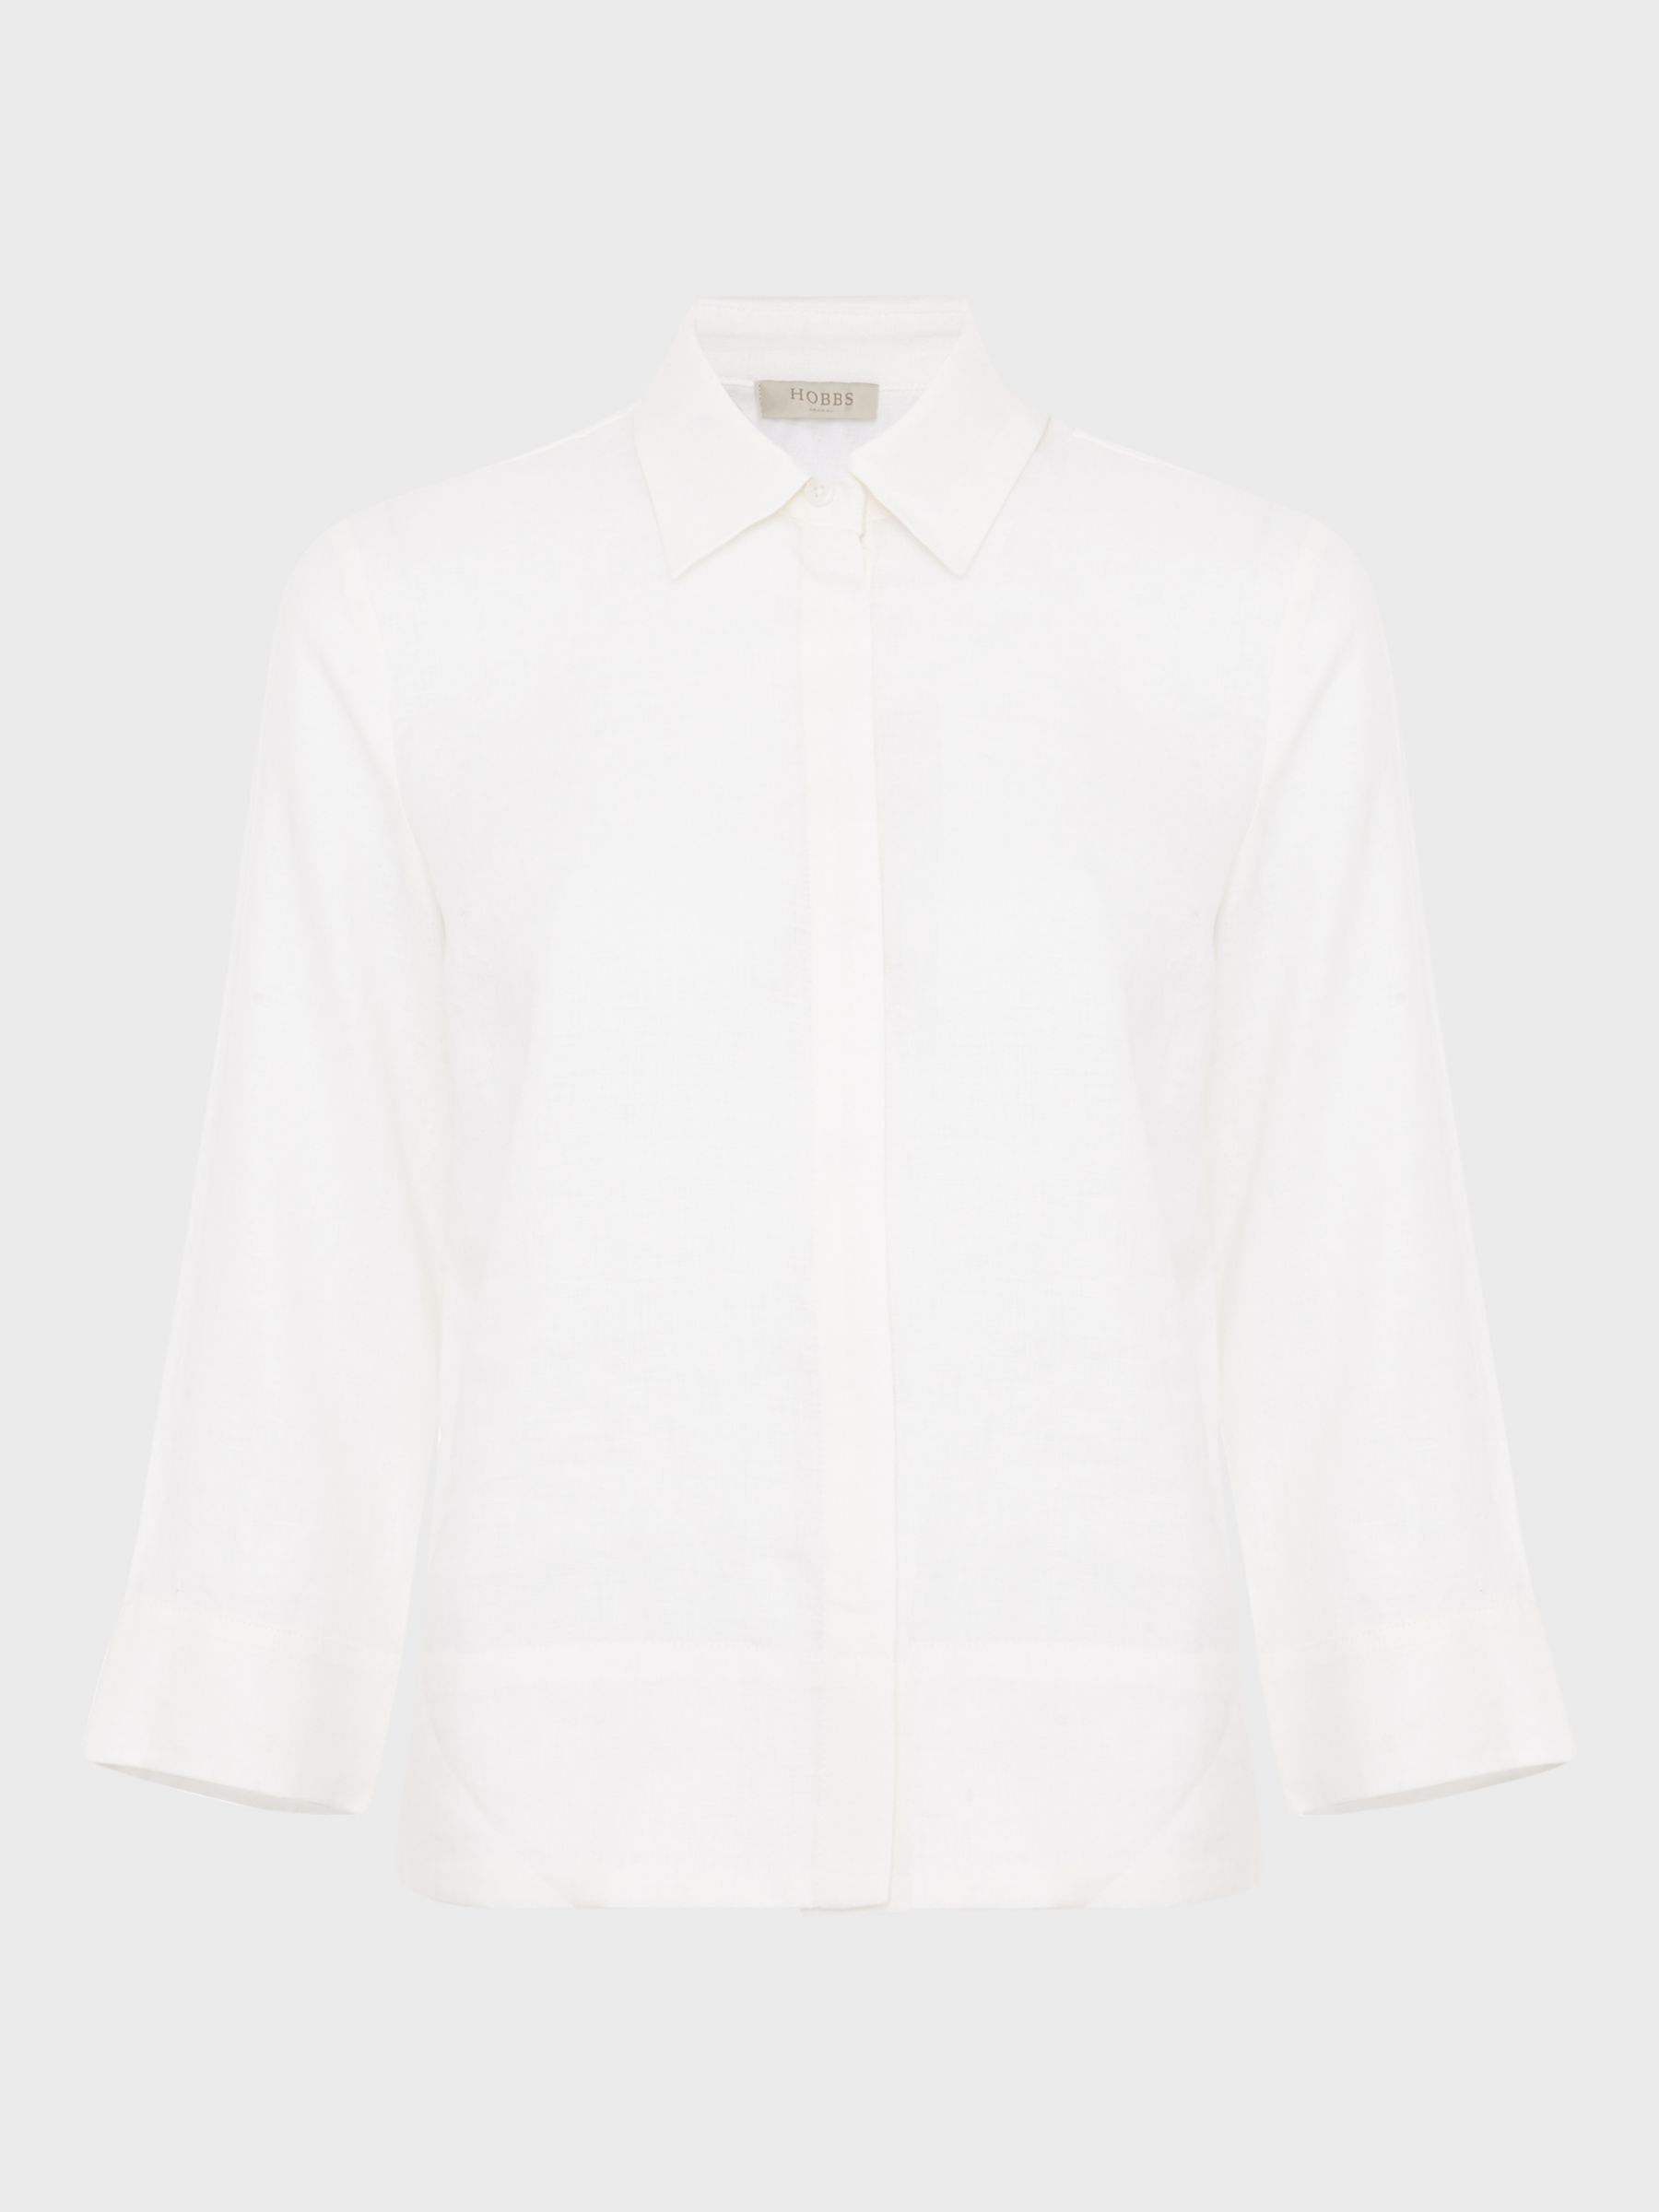 Hobbs Nita Cropped Linen Shirt, White, 18